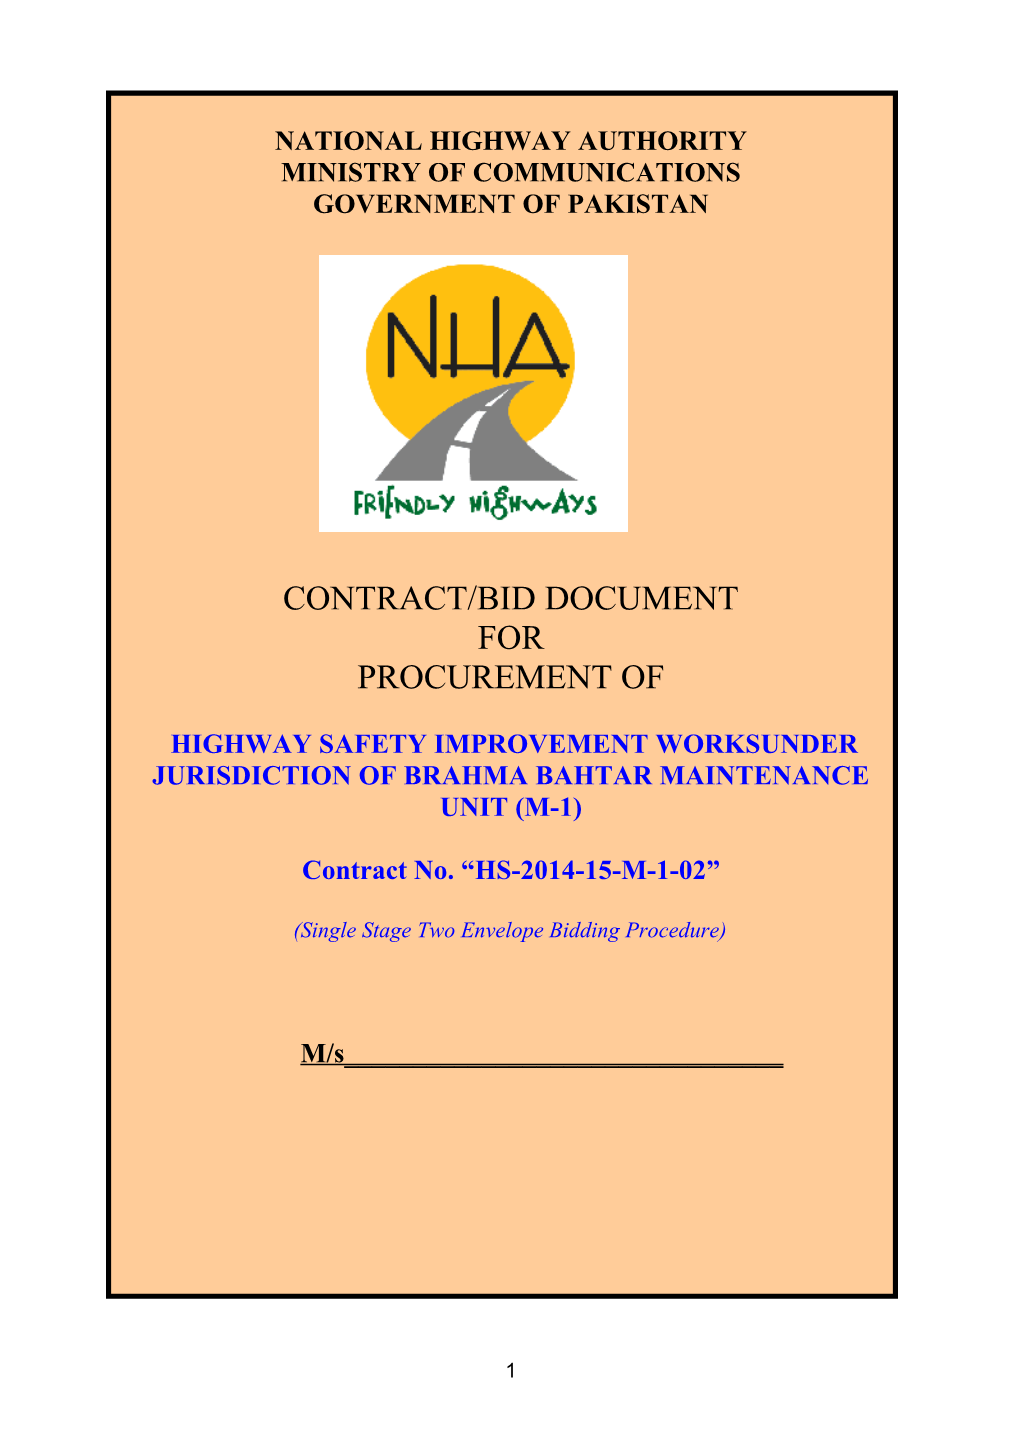 Standard Form of Bidding Documents for Procurement of Civil Works s2